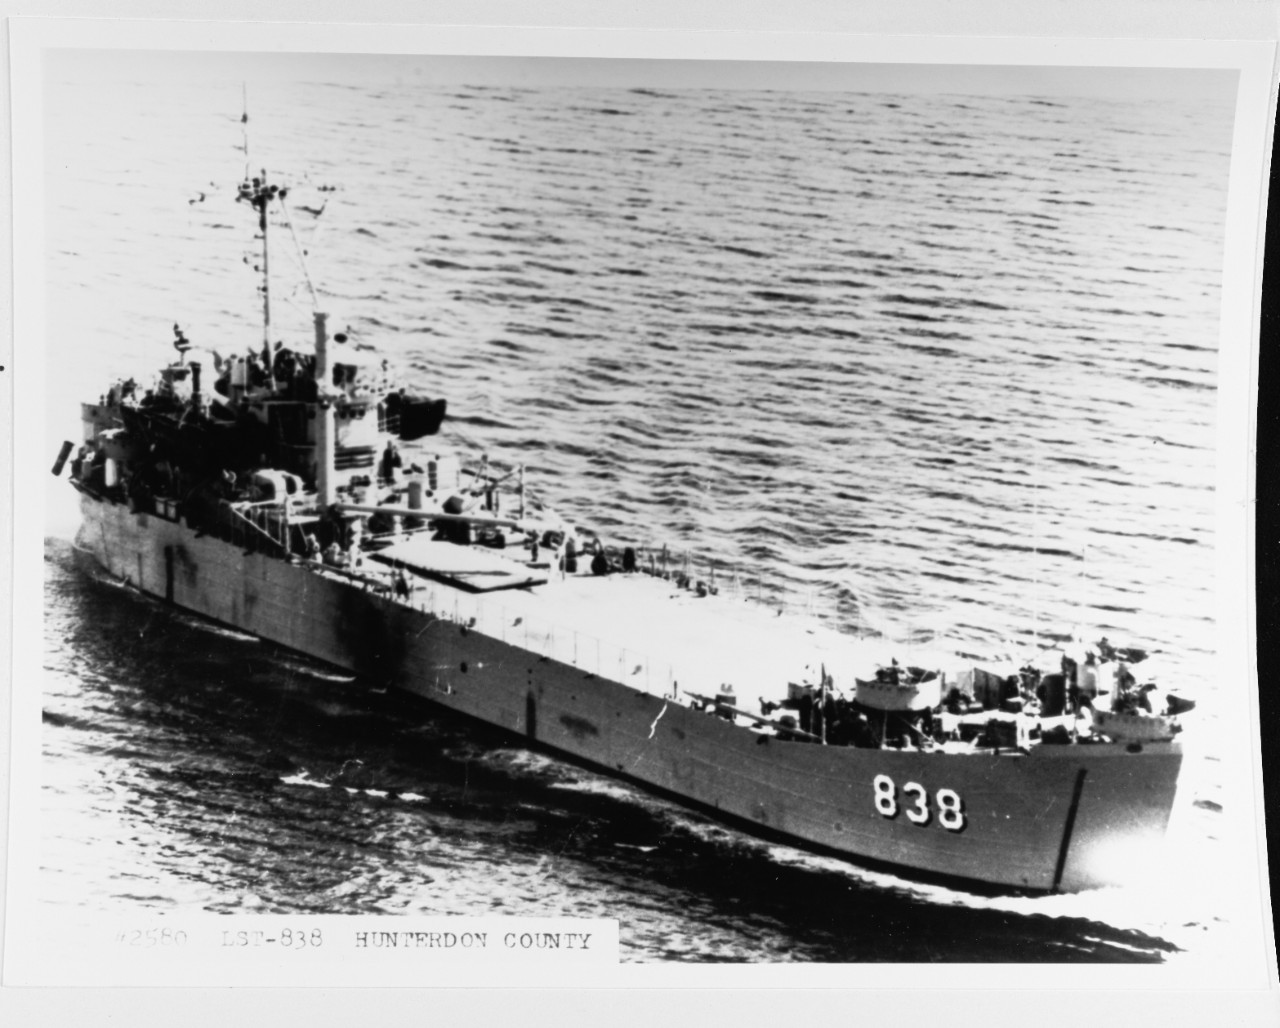 USS HUNTERDON COUNTY (LST-838)